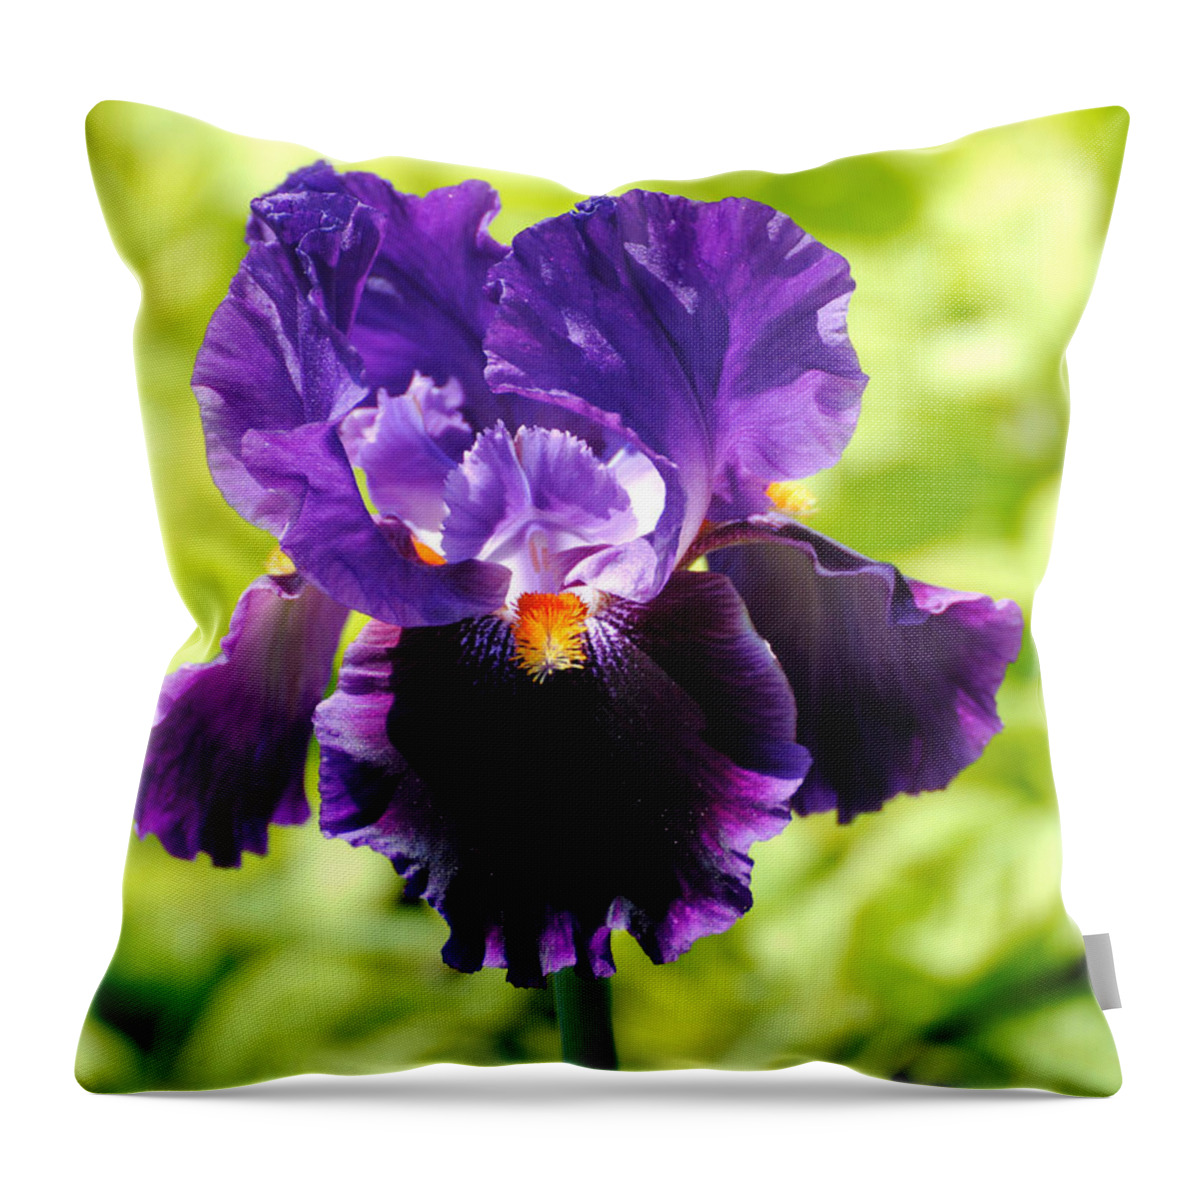 Flower Throw Pillow featuring the photograph Purple and Orange Iris by Jai Johnson